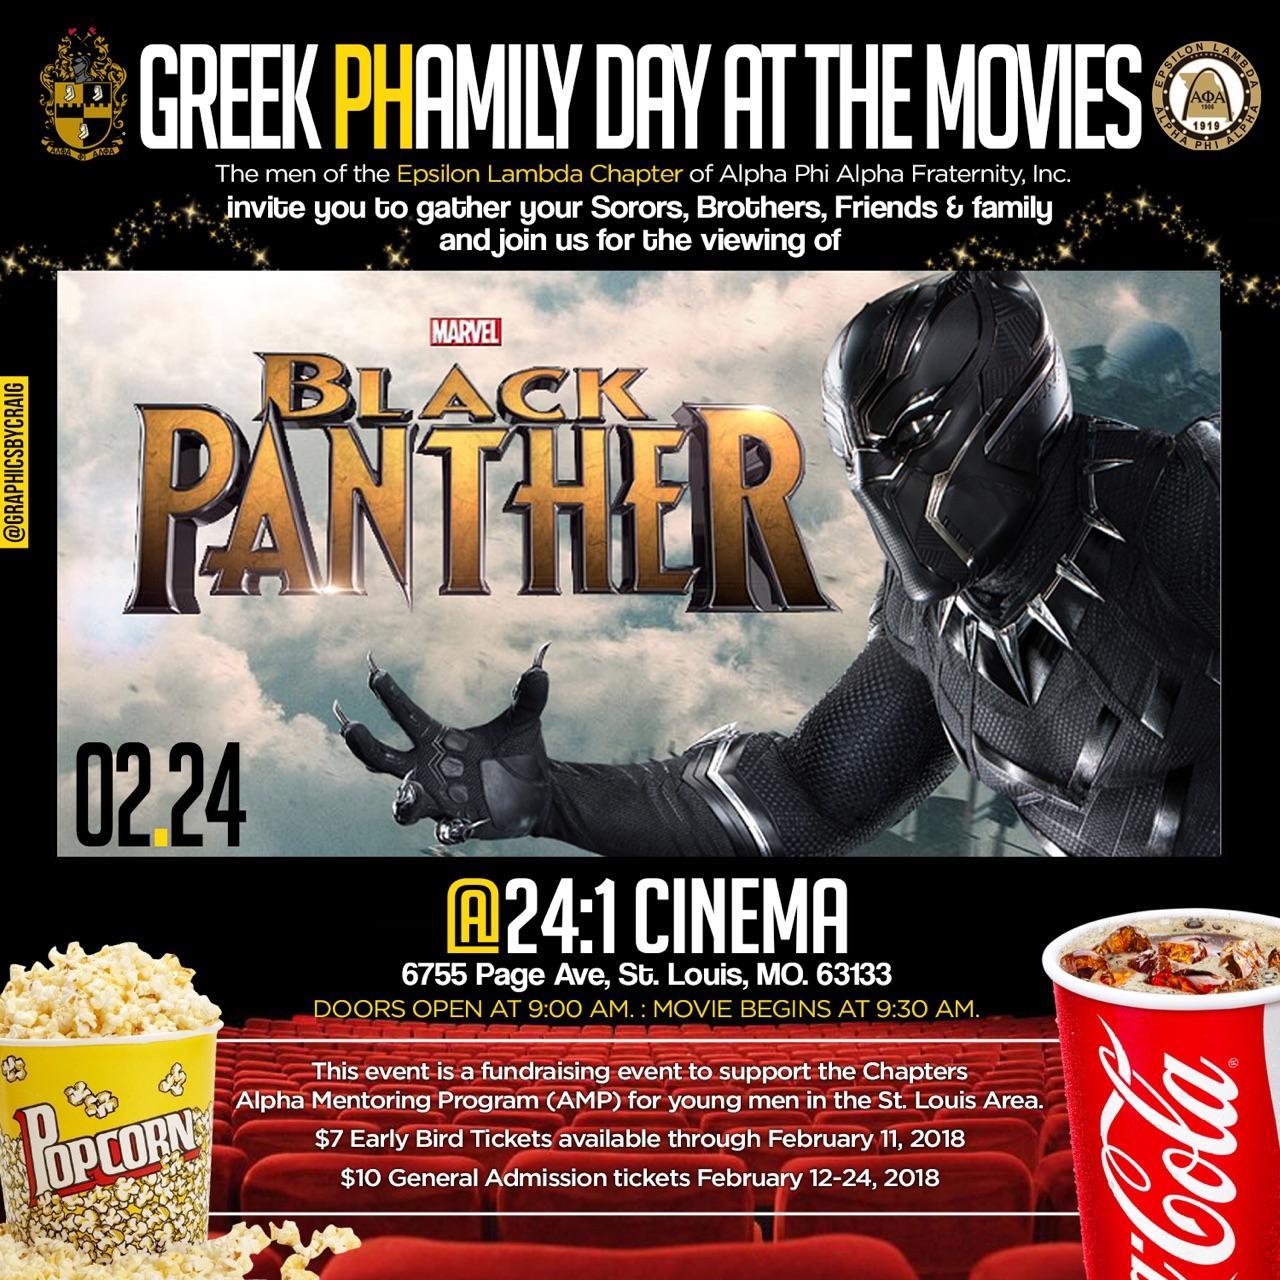 The Epsilon Lambda Chapter of Alpha Phi Alpha Fraternity presents Greek PHamily Day at the Movies